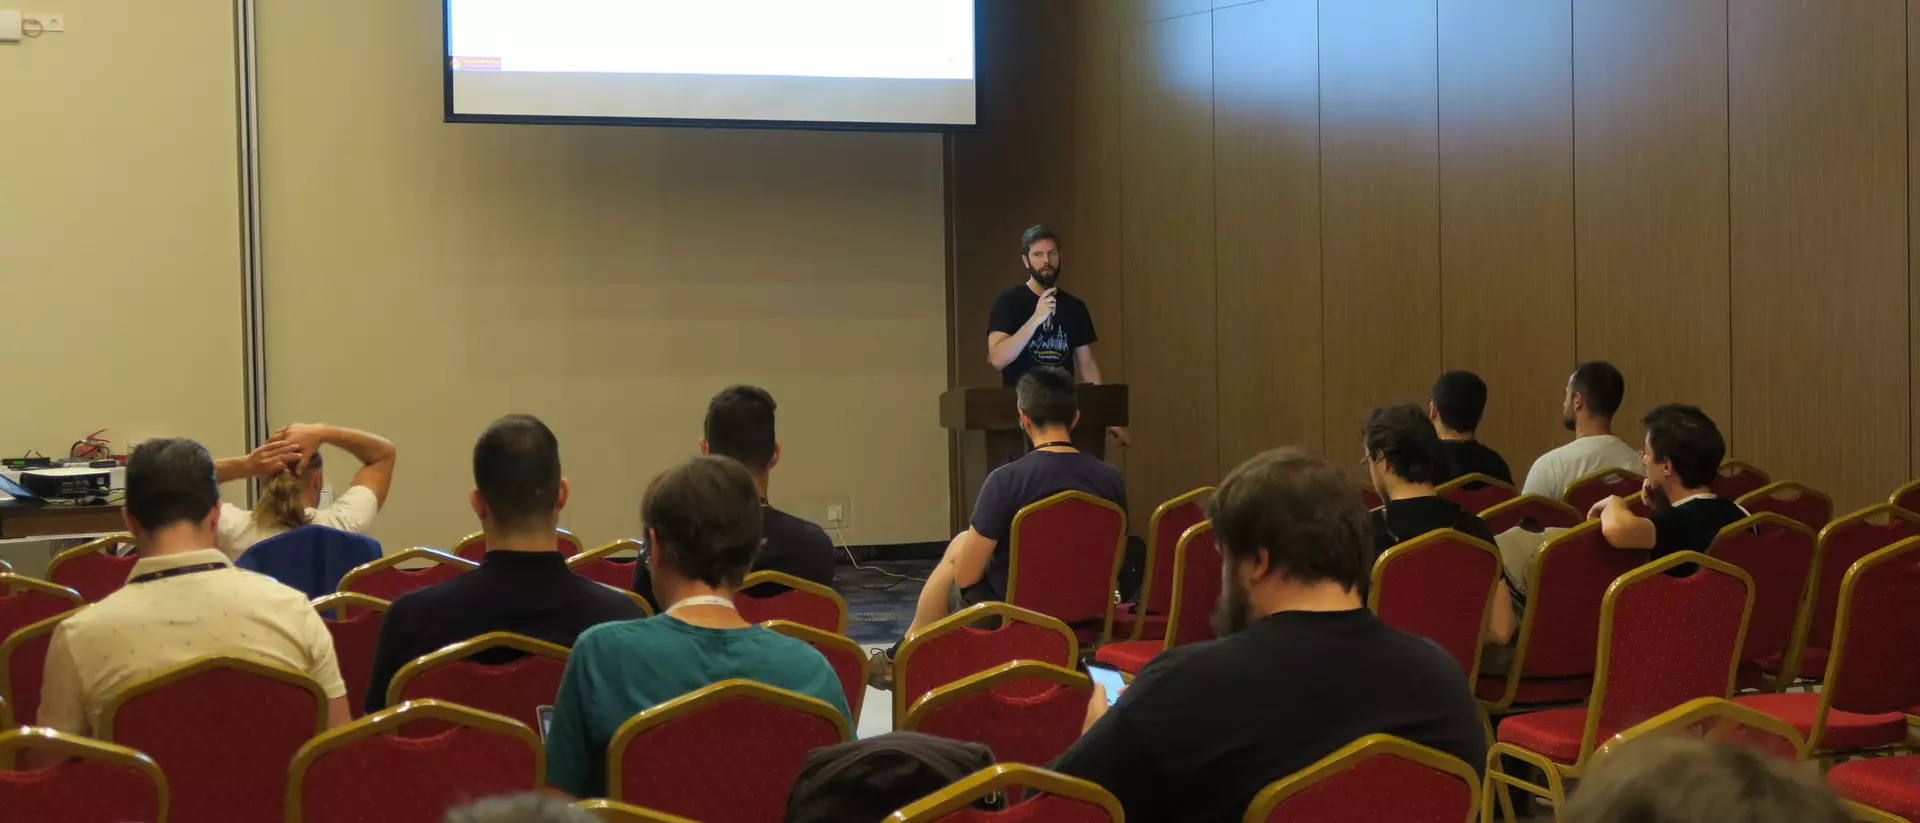 Jorge Tutor dando una charla en Drupal Dev Days Cluj-Napoca.